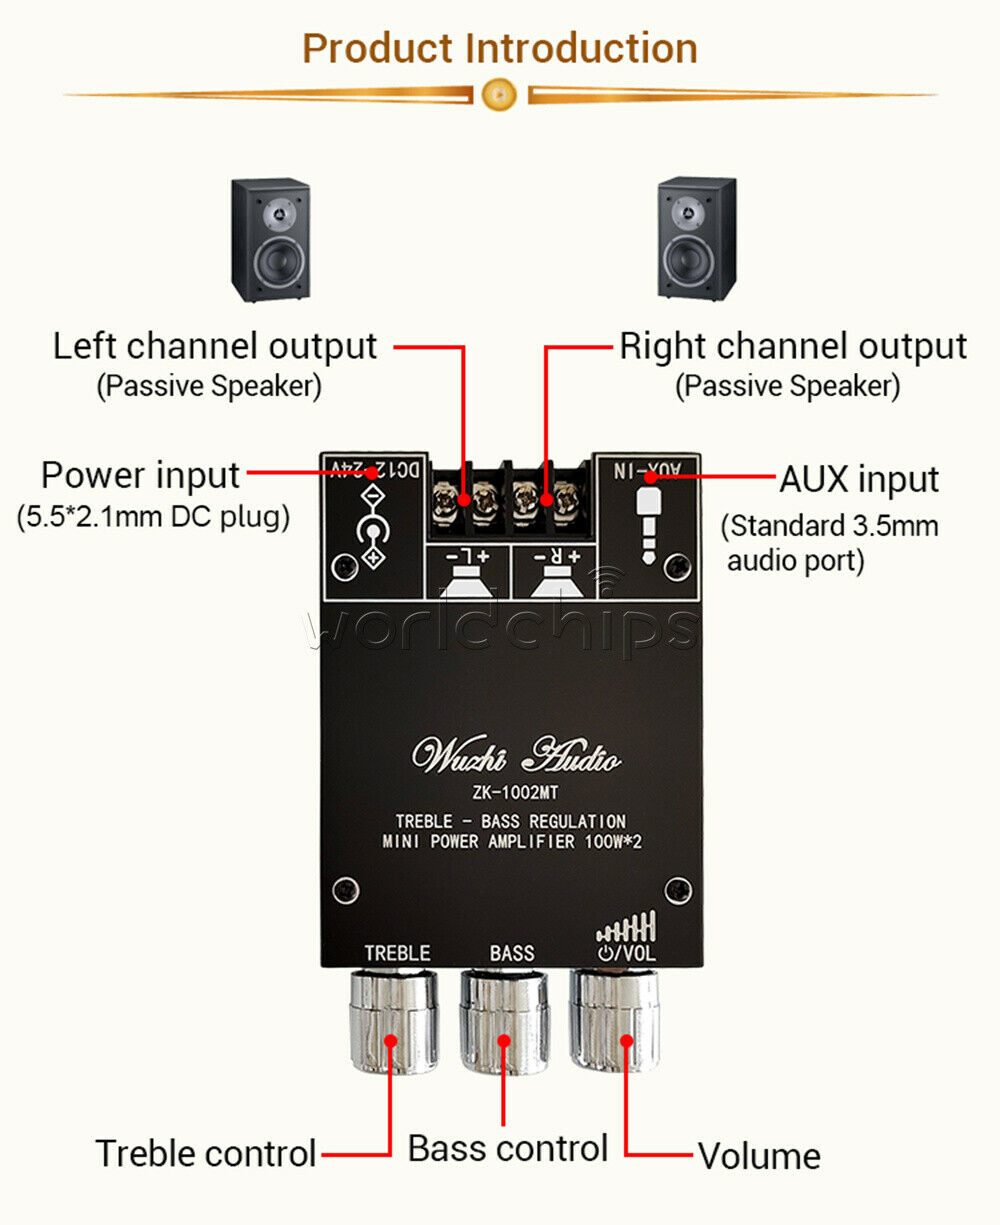 1002MT Mini Bluetooth Digital Amplifier Module Stereo Desktop Audio Amp Board